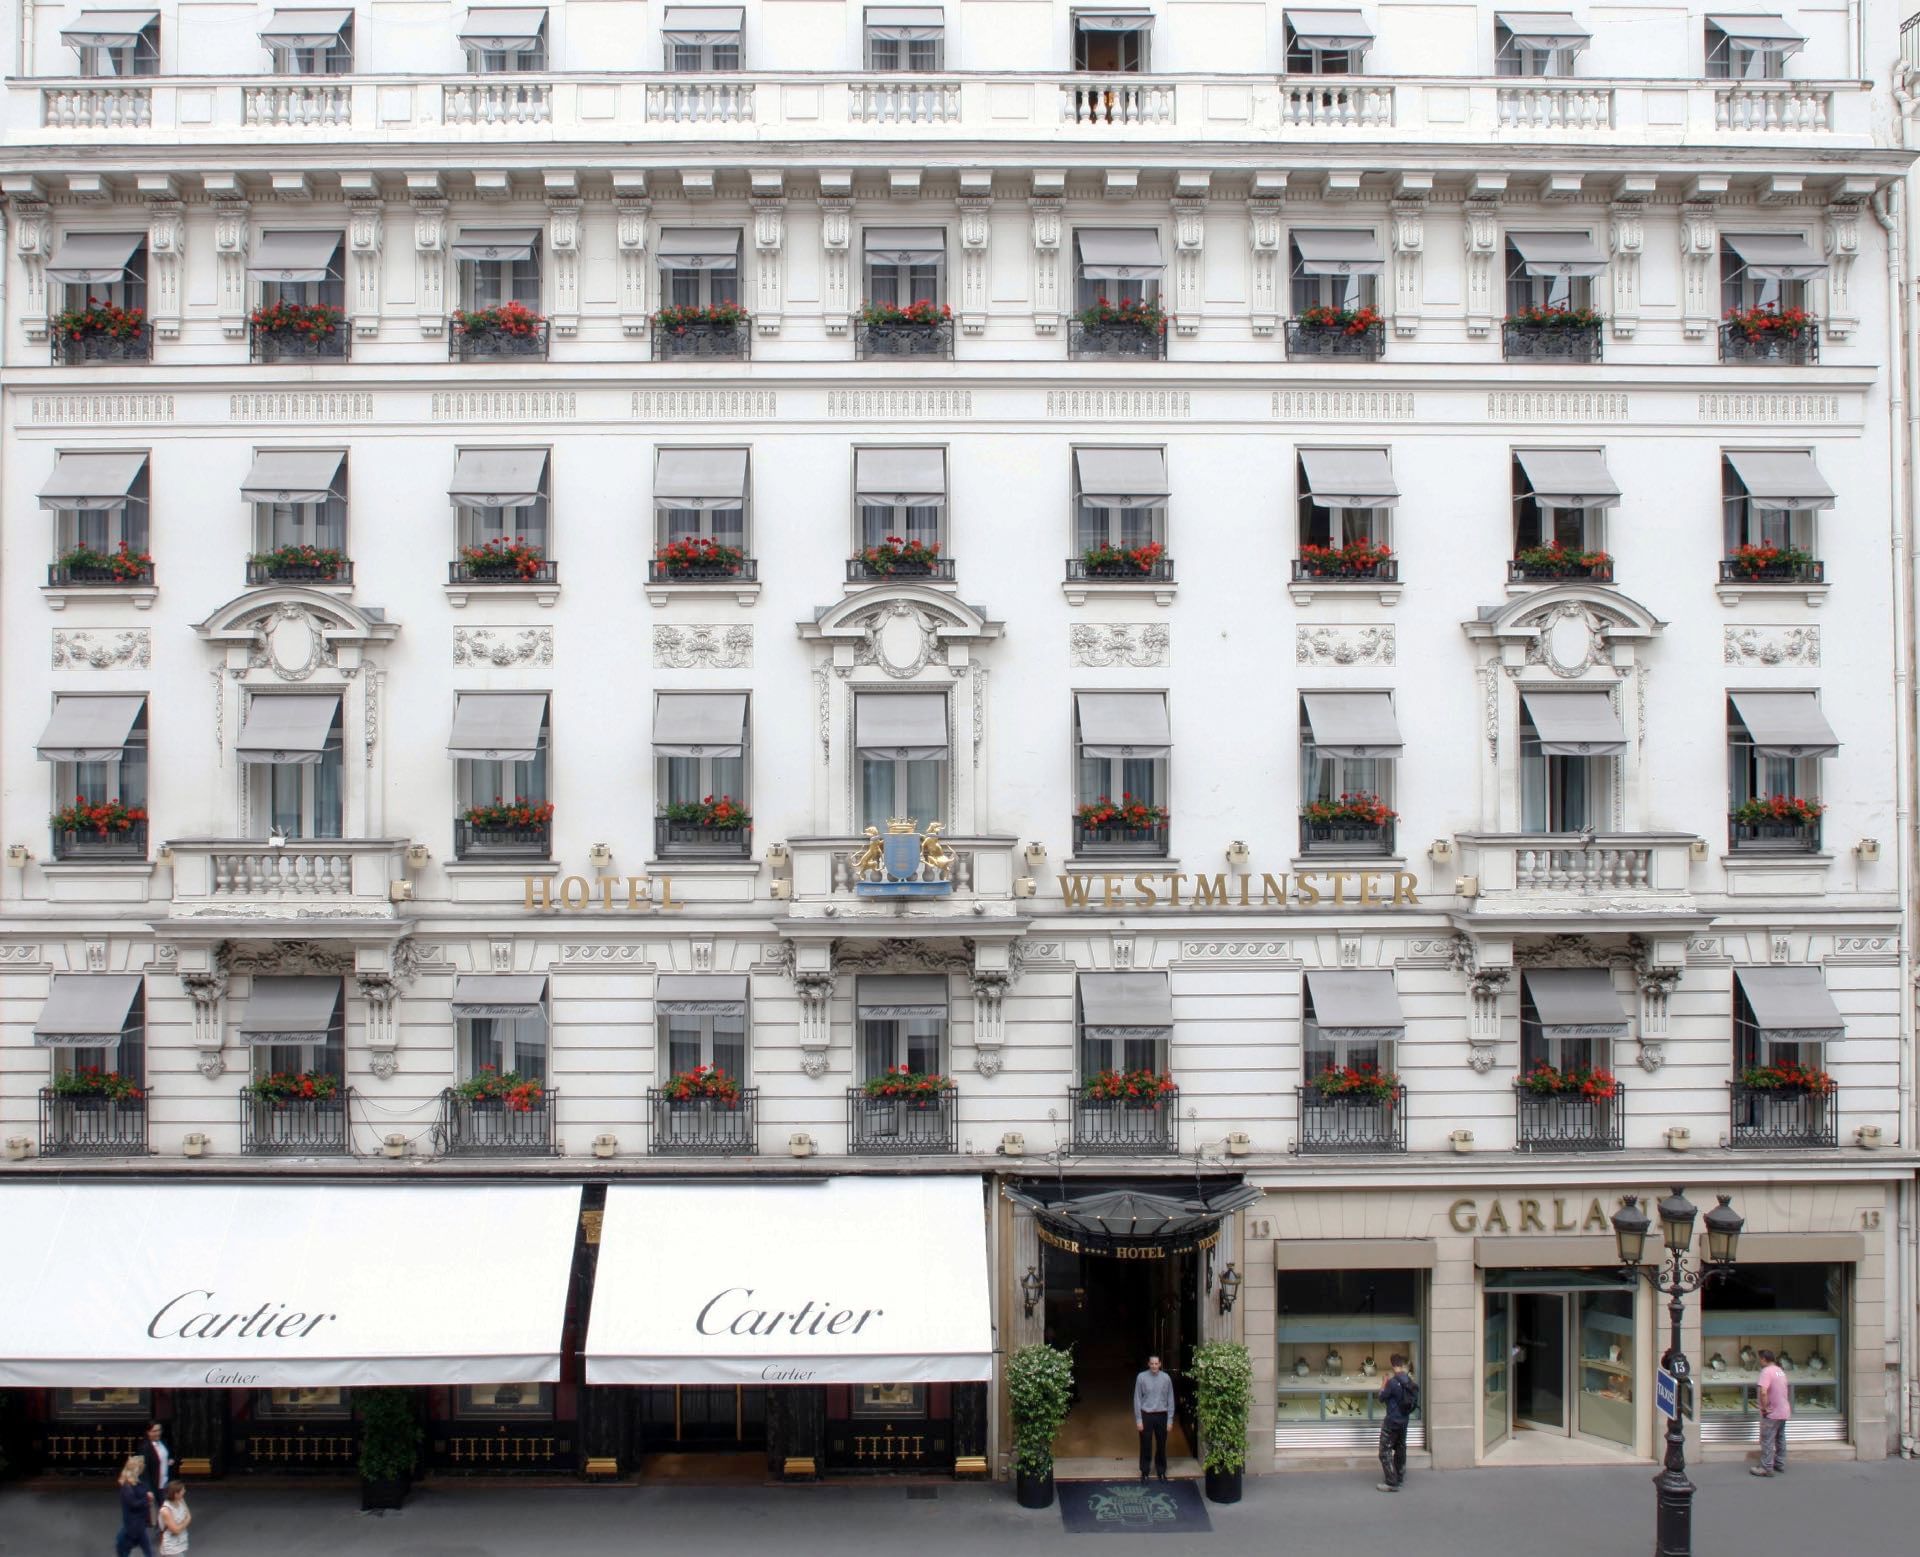 Facade of Hotel Westminster Warwick Paris